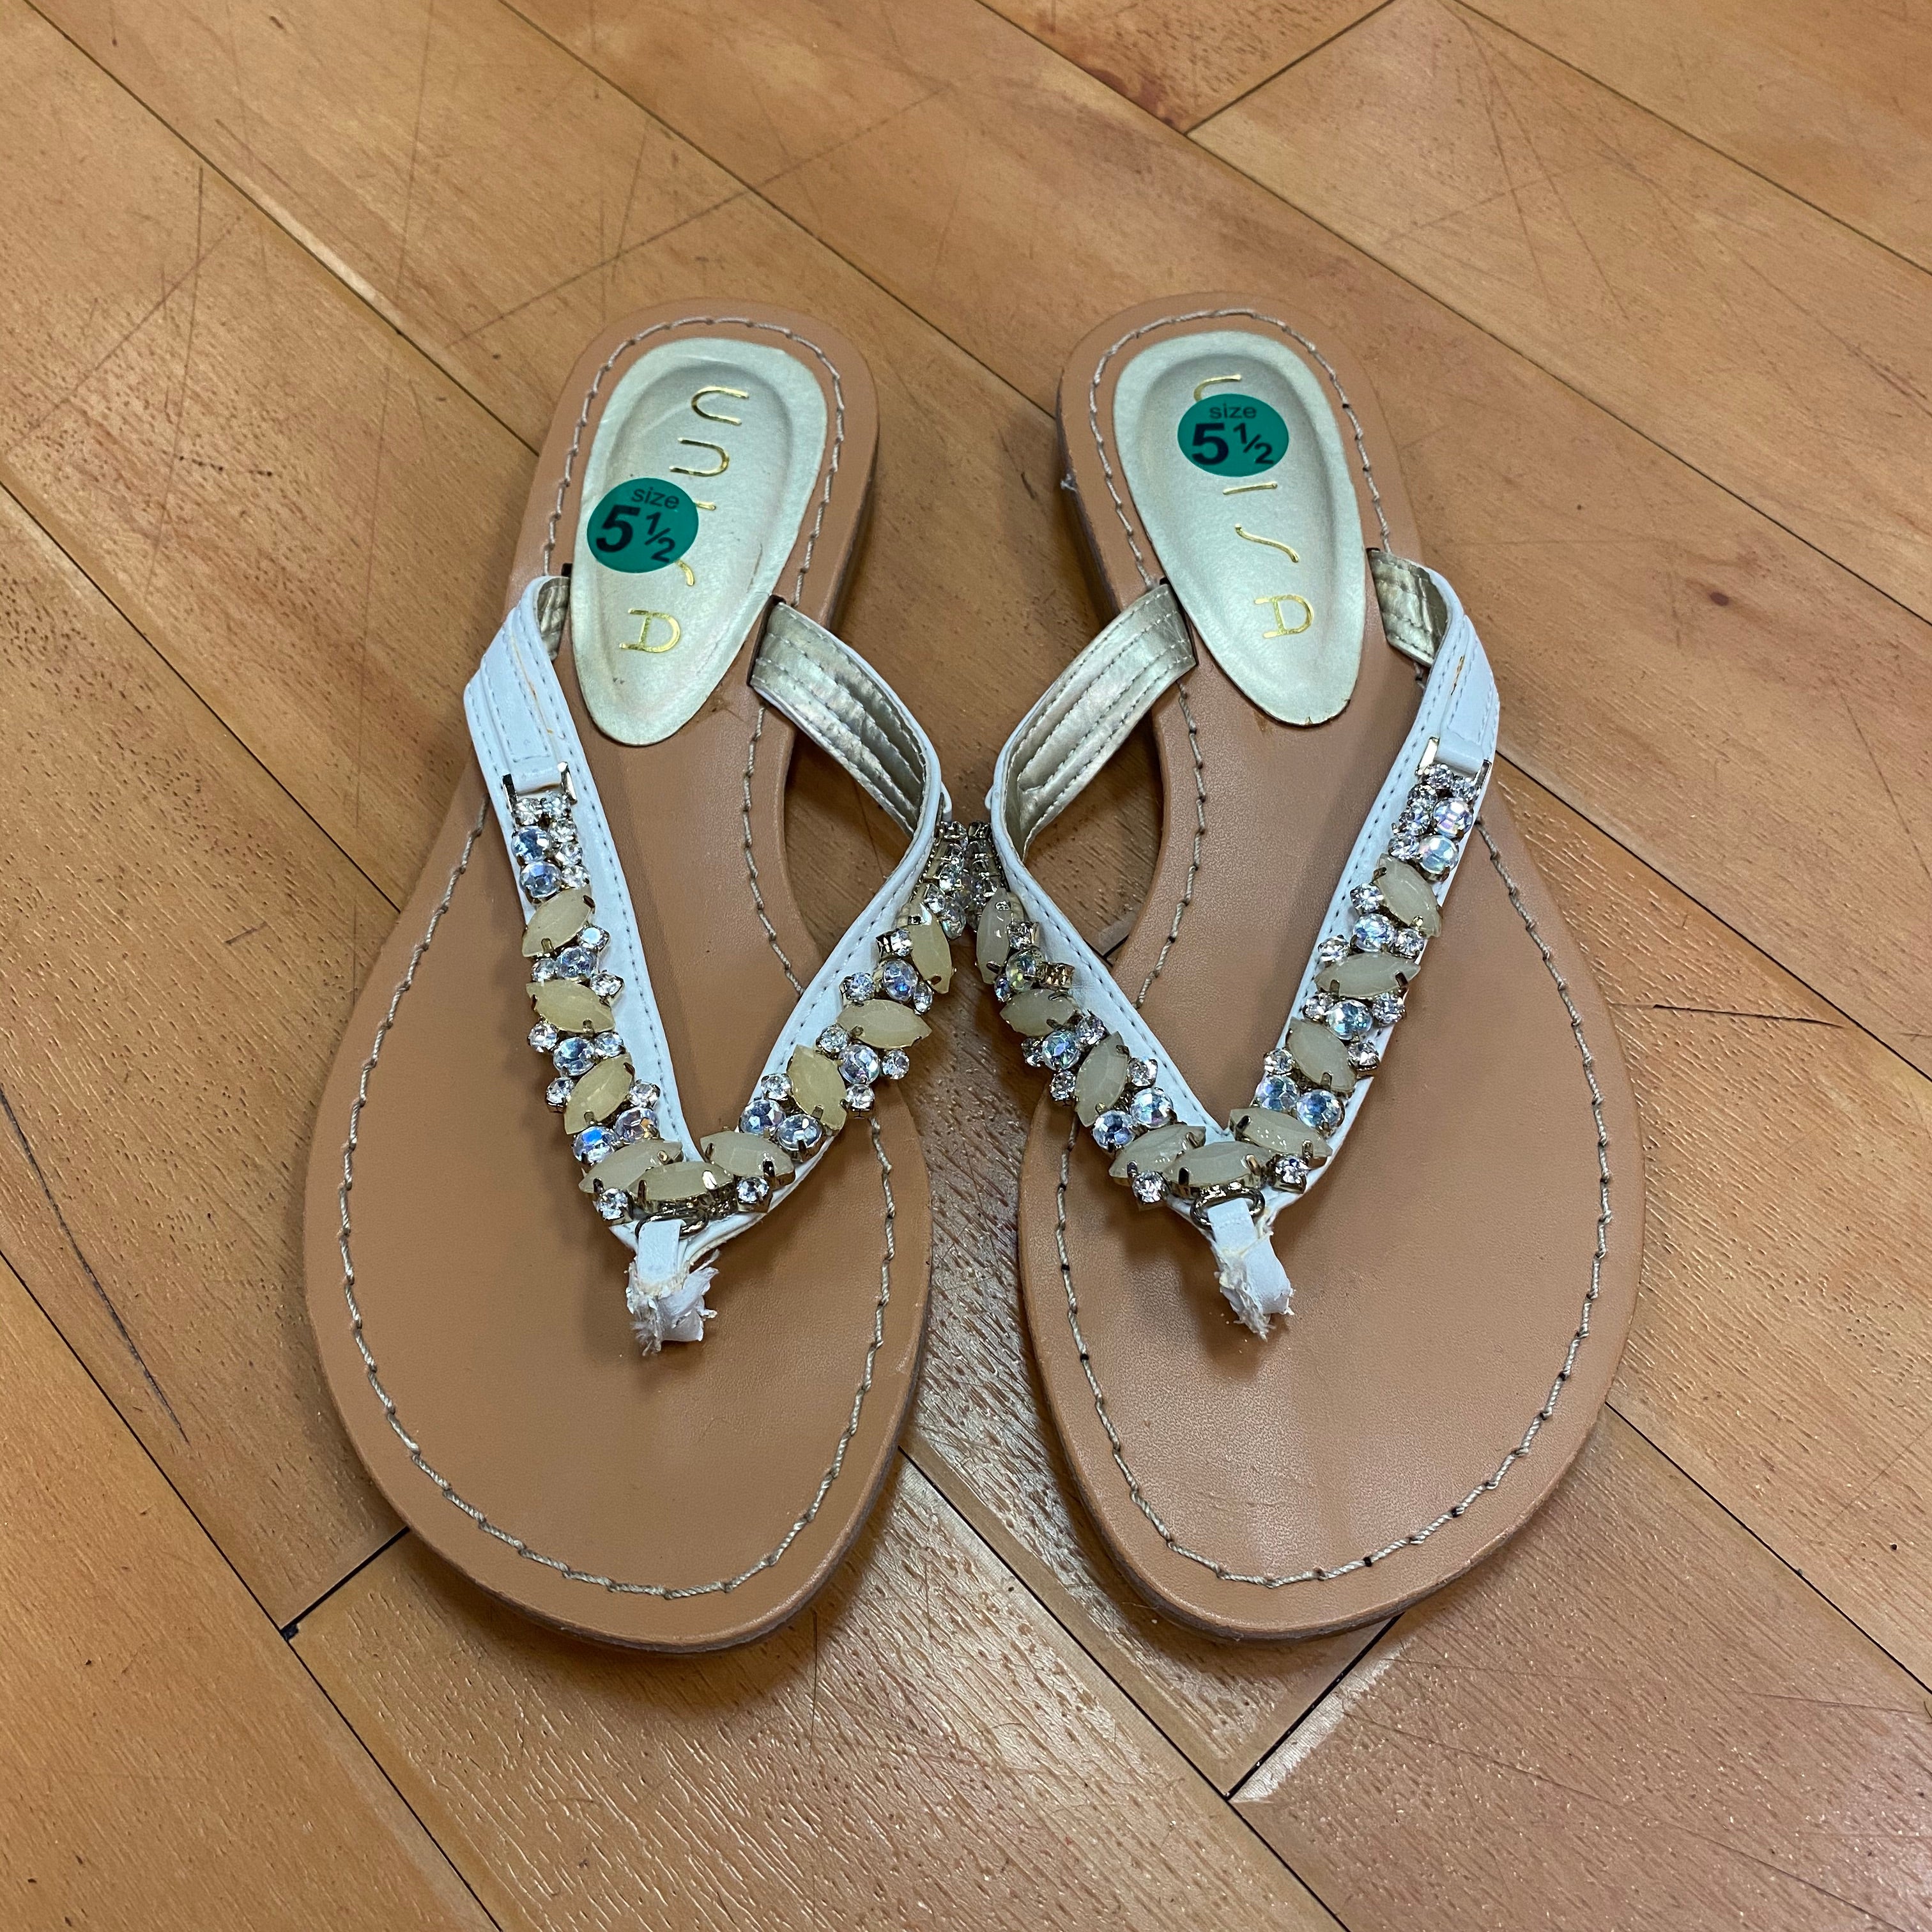 white sandals size 5.5